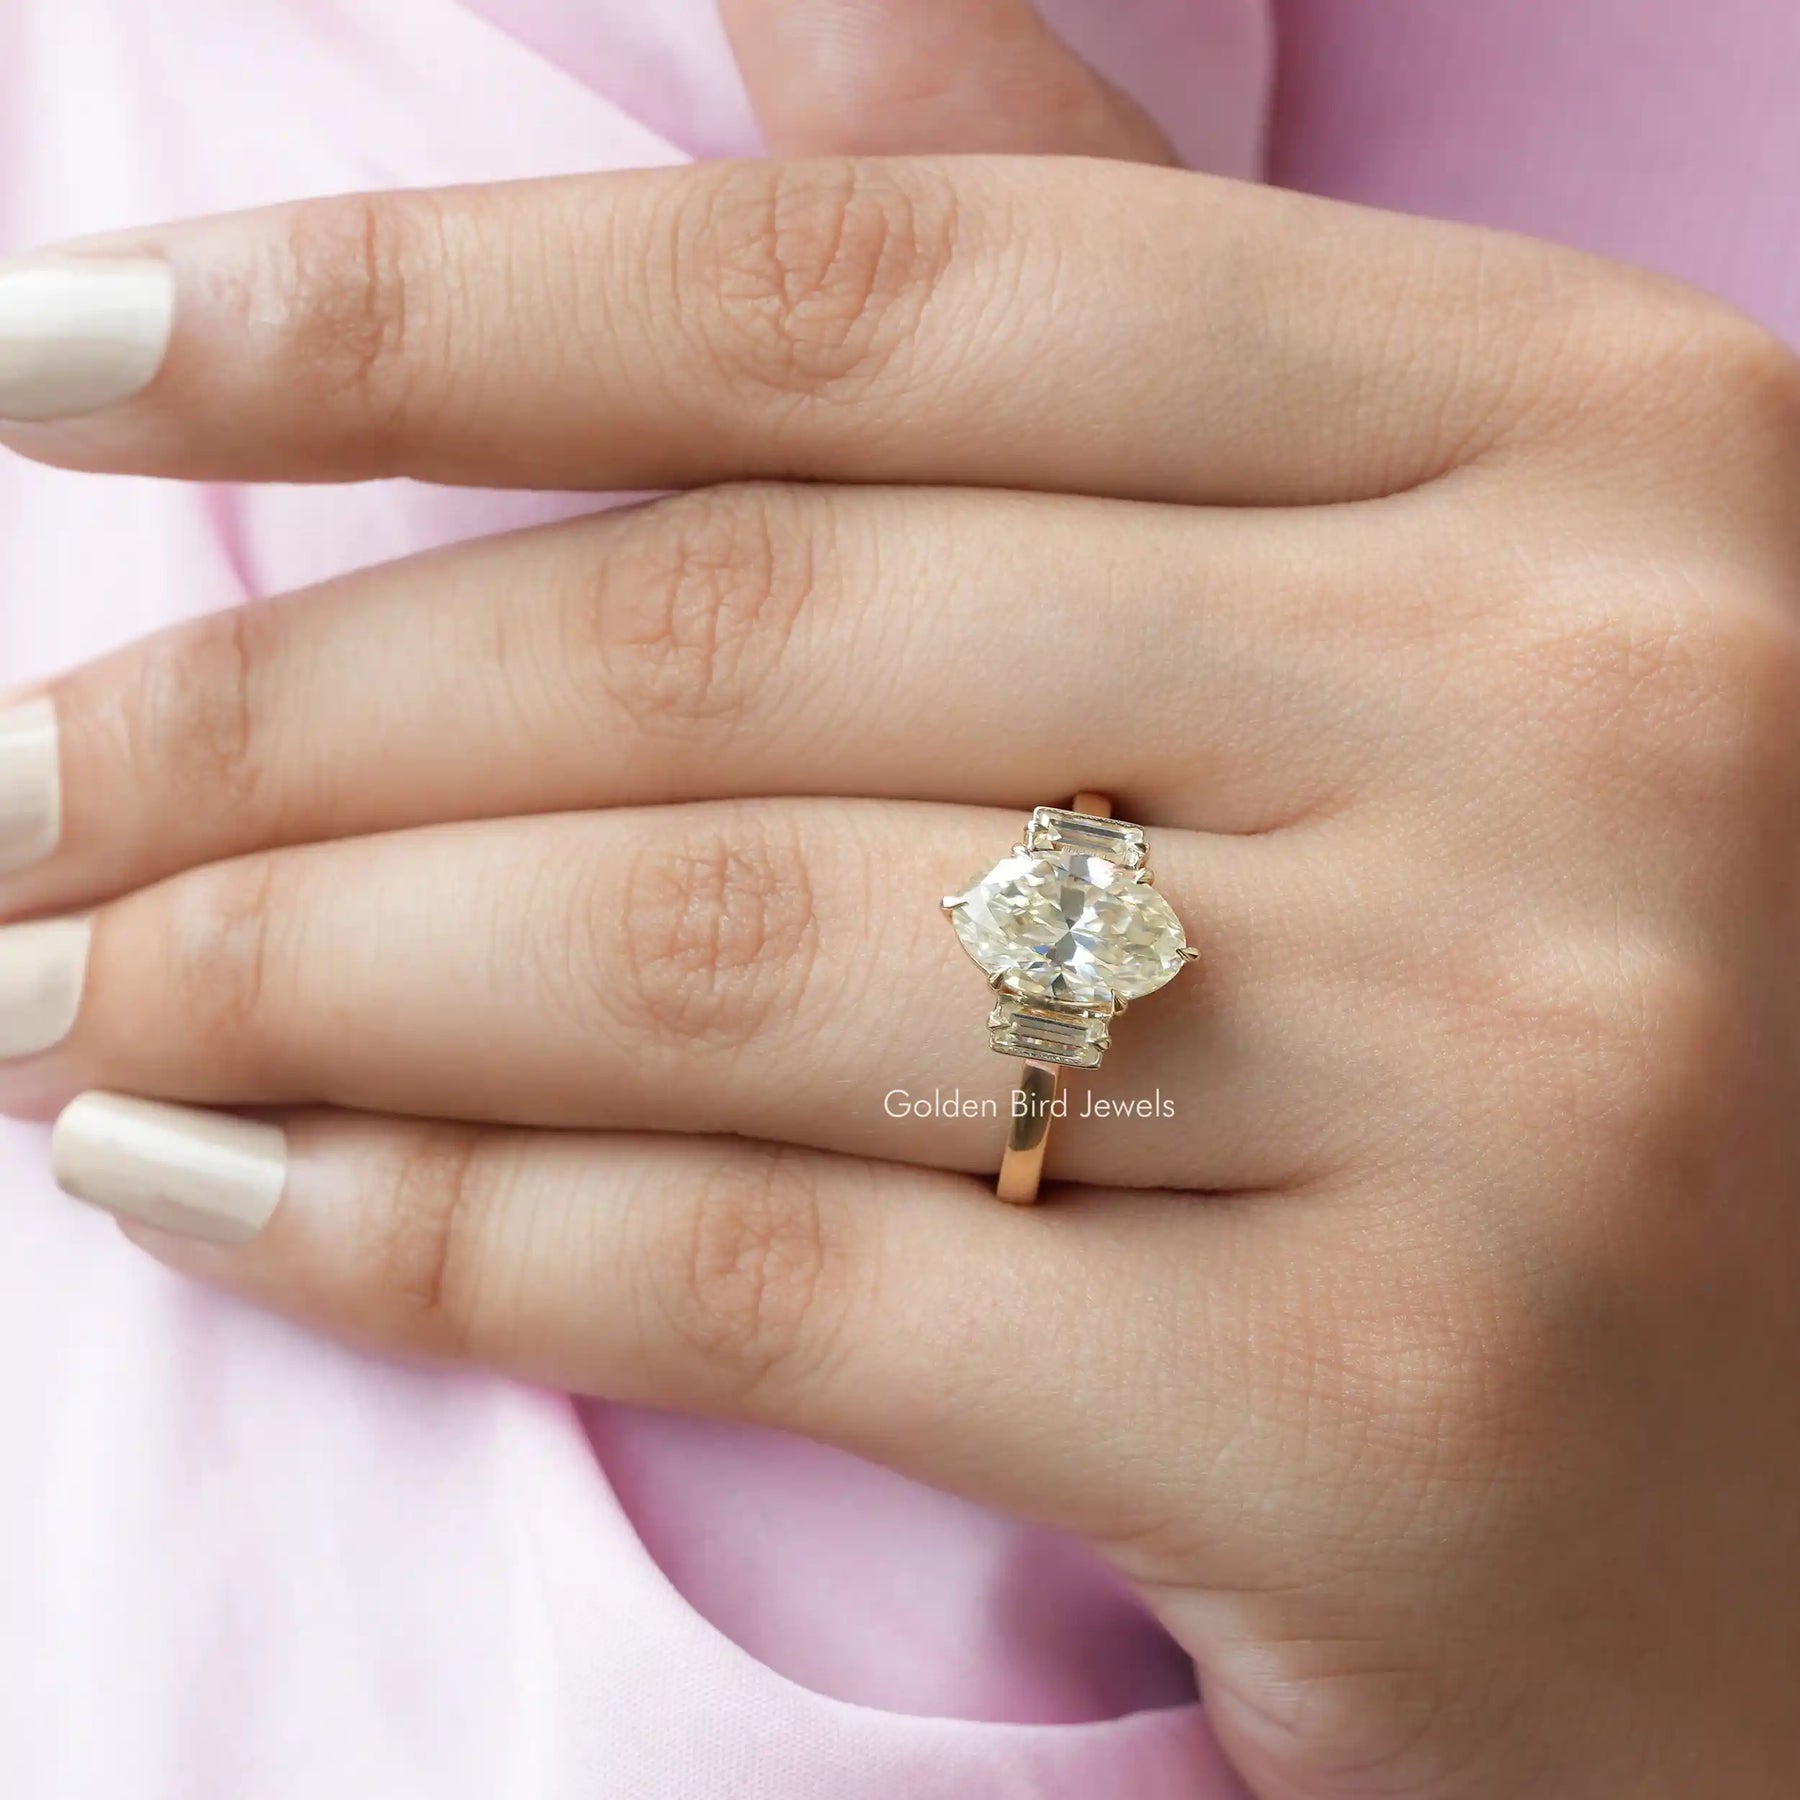 3.00ct Pear Cut Pink Diamond Halo Pendant, Bridal Diamond Necklace, 925  Silver